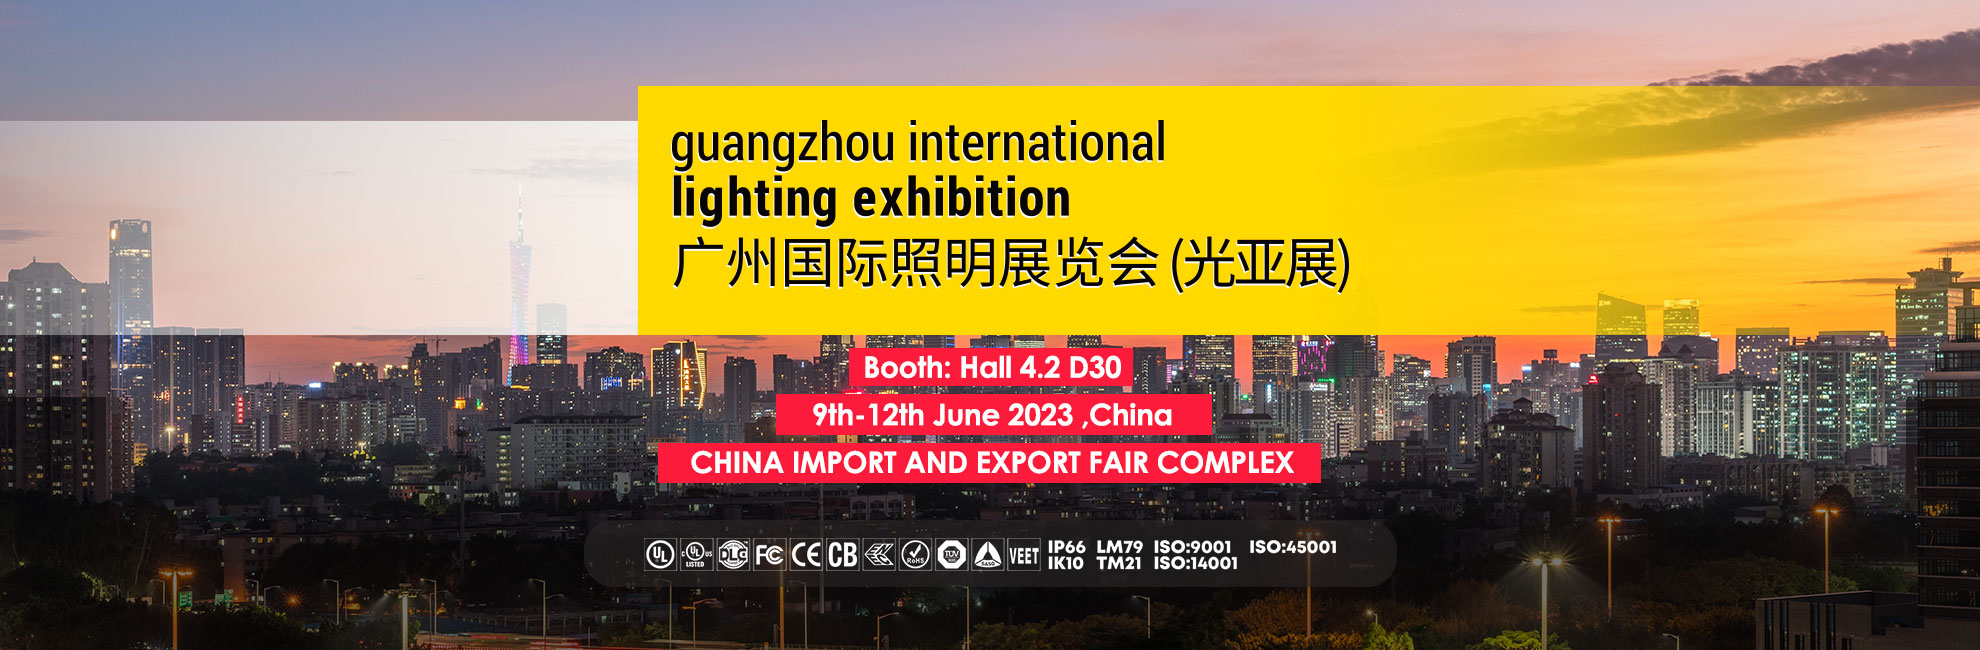 International Lighting Exhibition 2023 Guangzhou